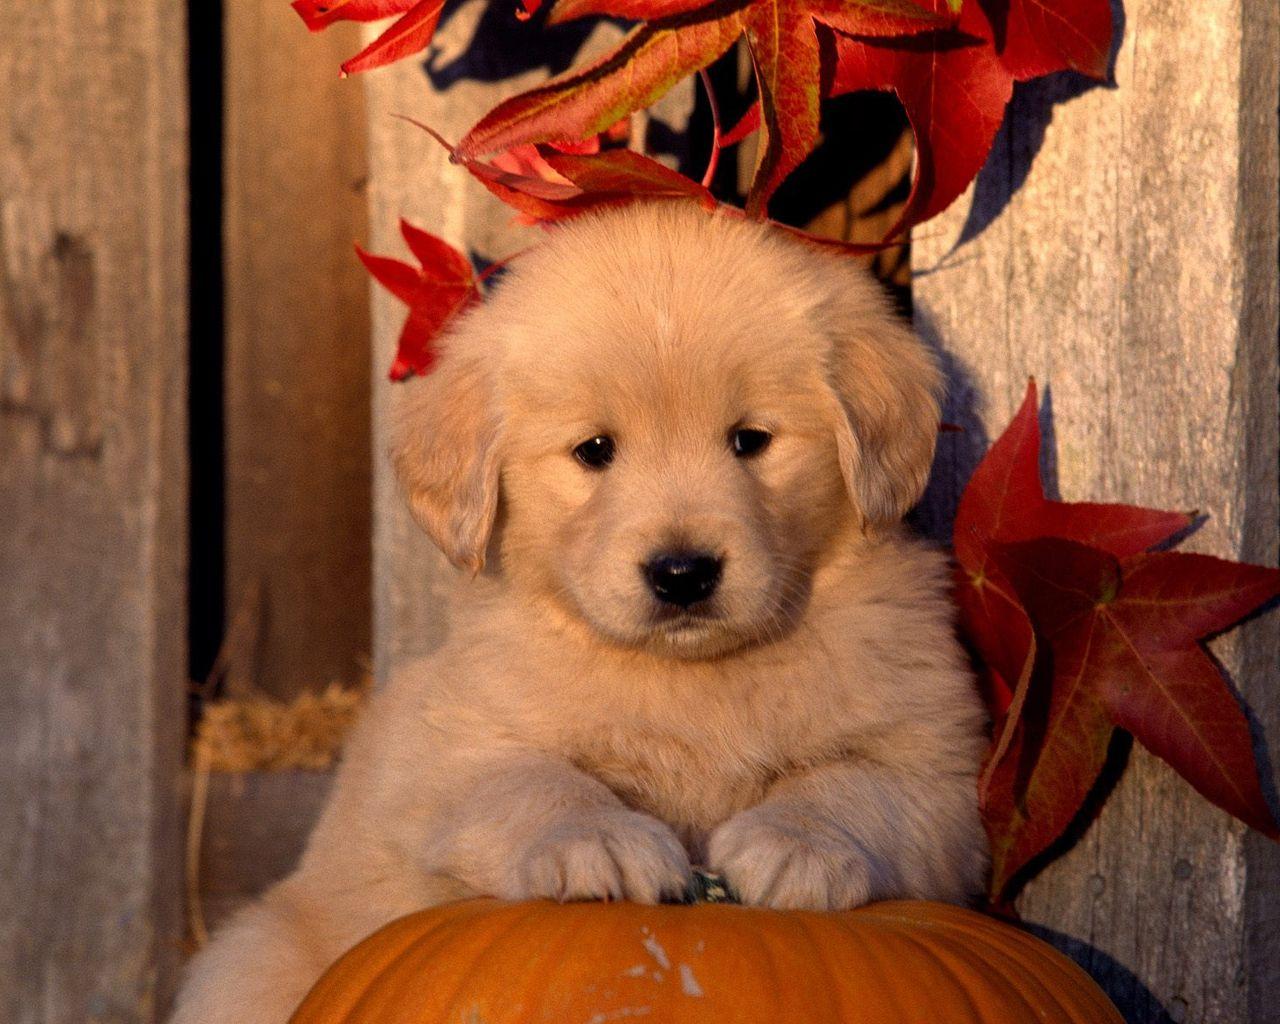 Download wallpapers Labrador Retriever Large Brown Dog Pet Pumpkin  Garden Halloween Autumn Golden Retriever Dog  Dog photoshoot Dog  halloween Dog photos